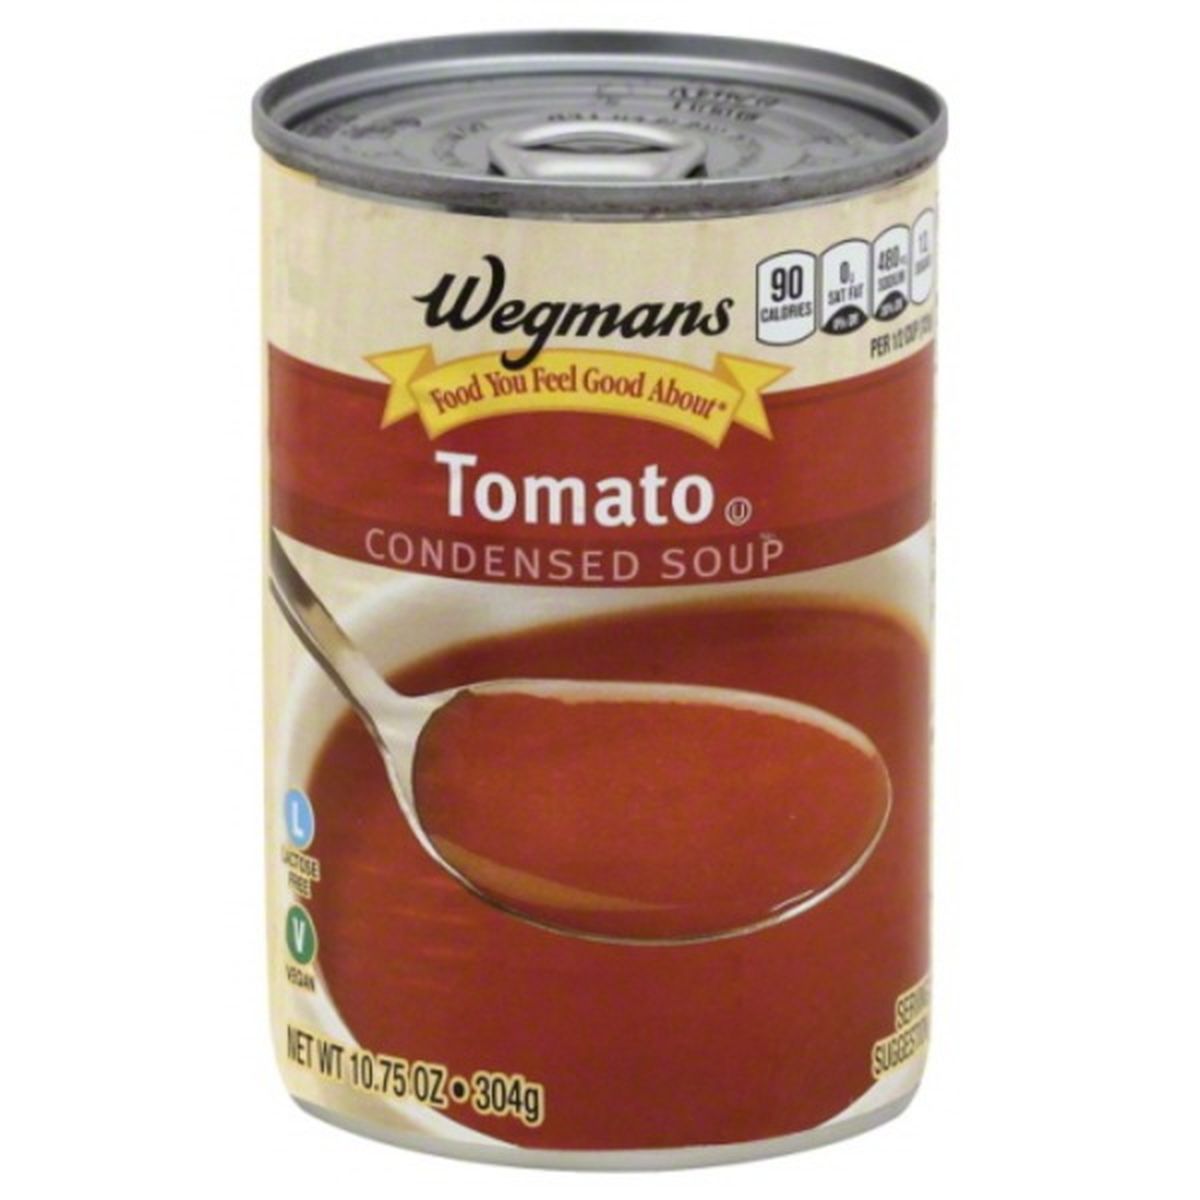 Calories in Wegmans Condensed Tomato Soup